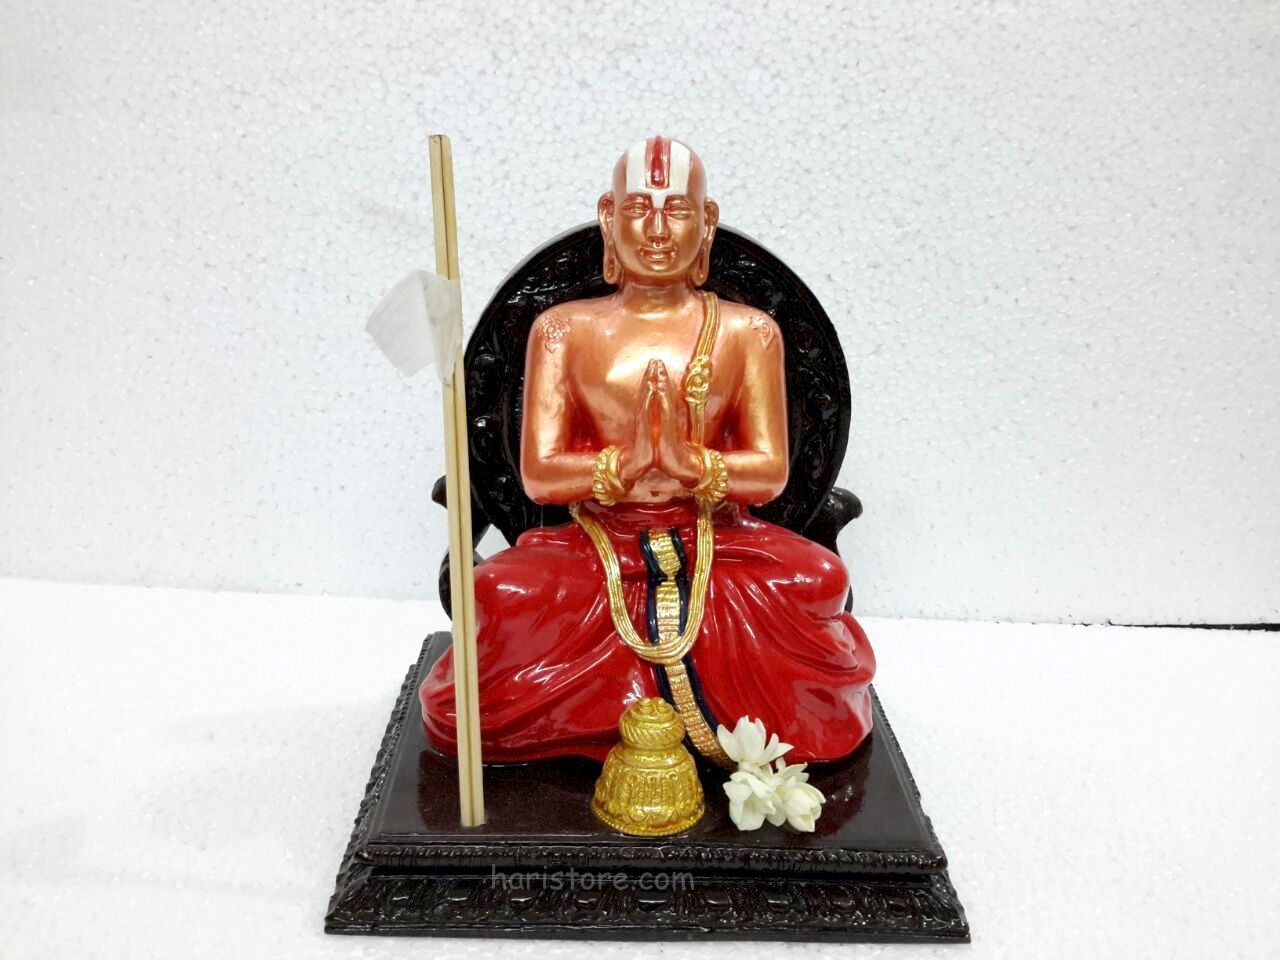 Swami Ramanujar – haristore.com